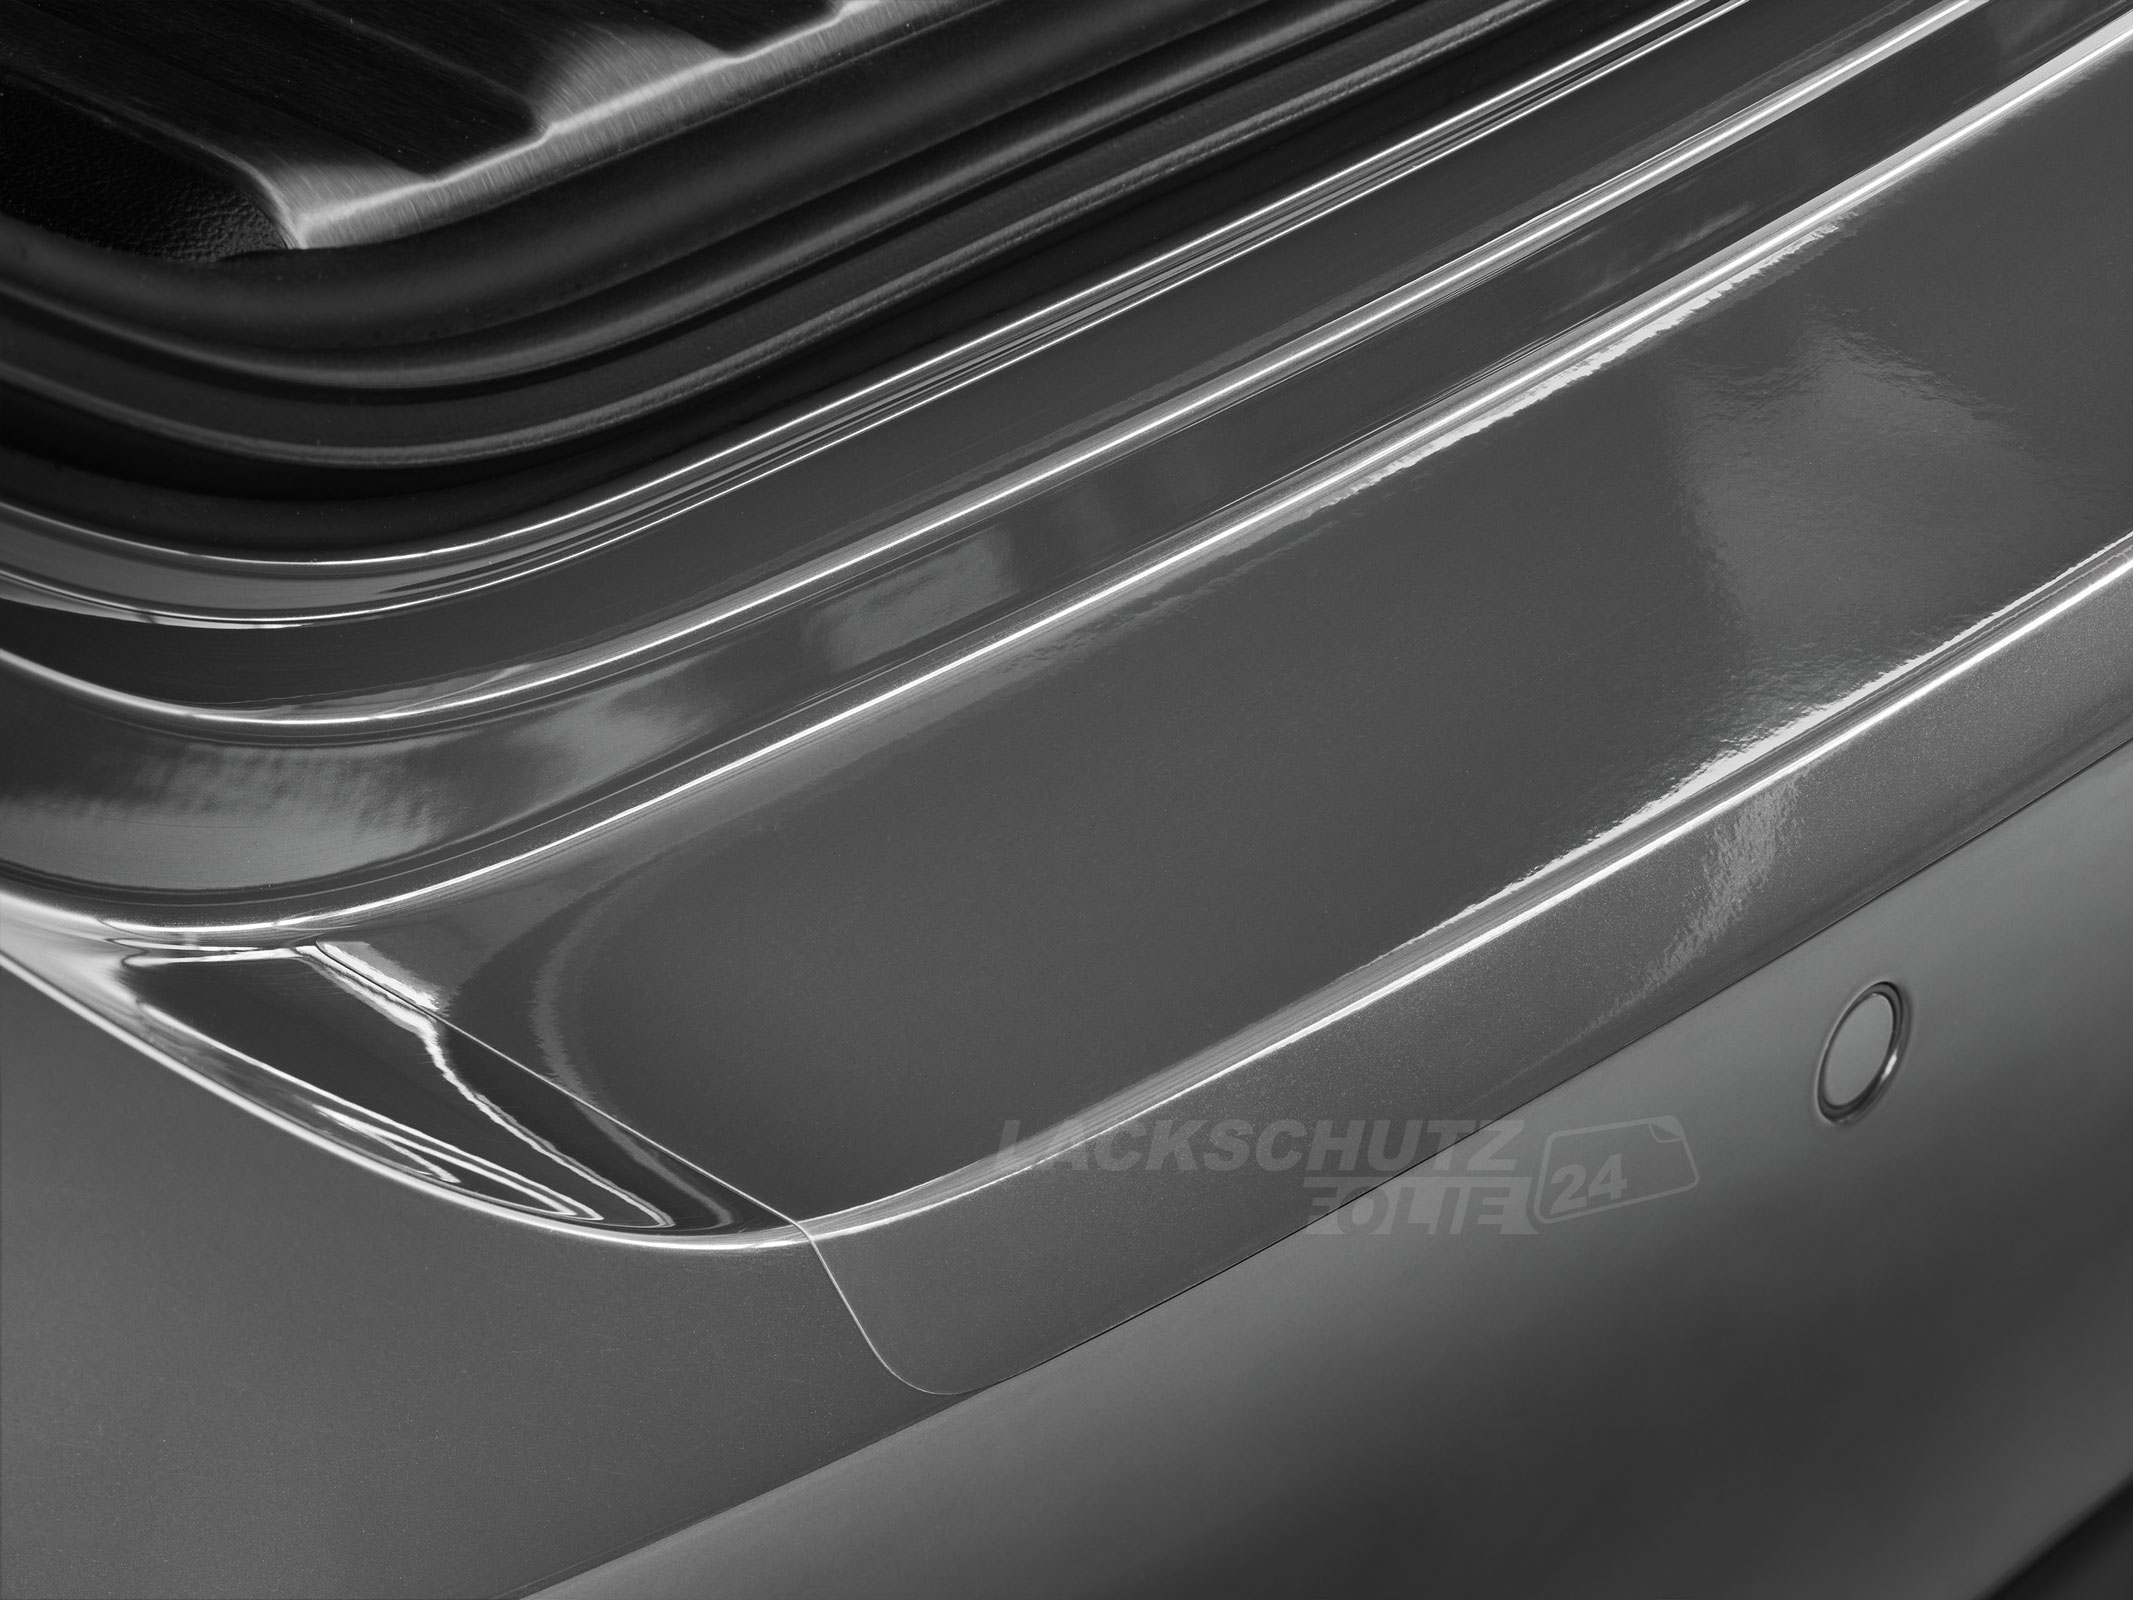 Ladekantenschutzfolie - Transparent Glatt Hochglänzend 240 µm stark für Audi A6 Avant (Kombi) C5, Typ 4B, bis BJ 2005